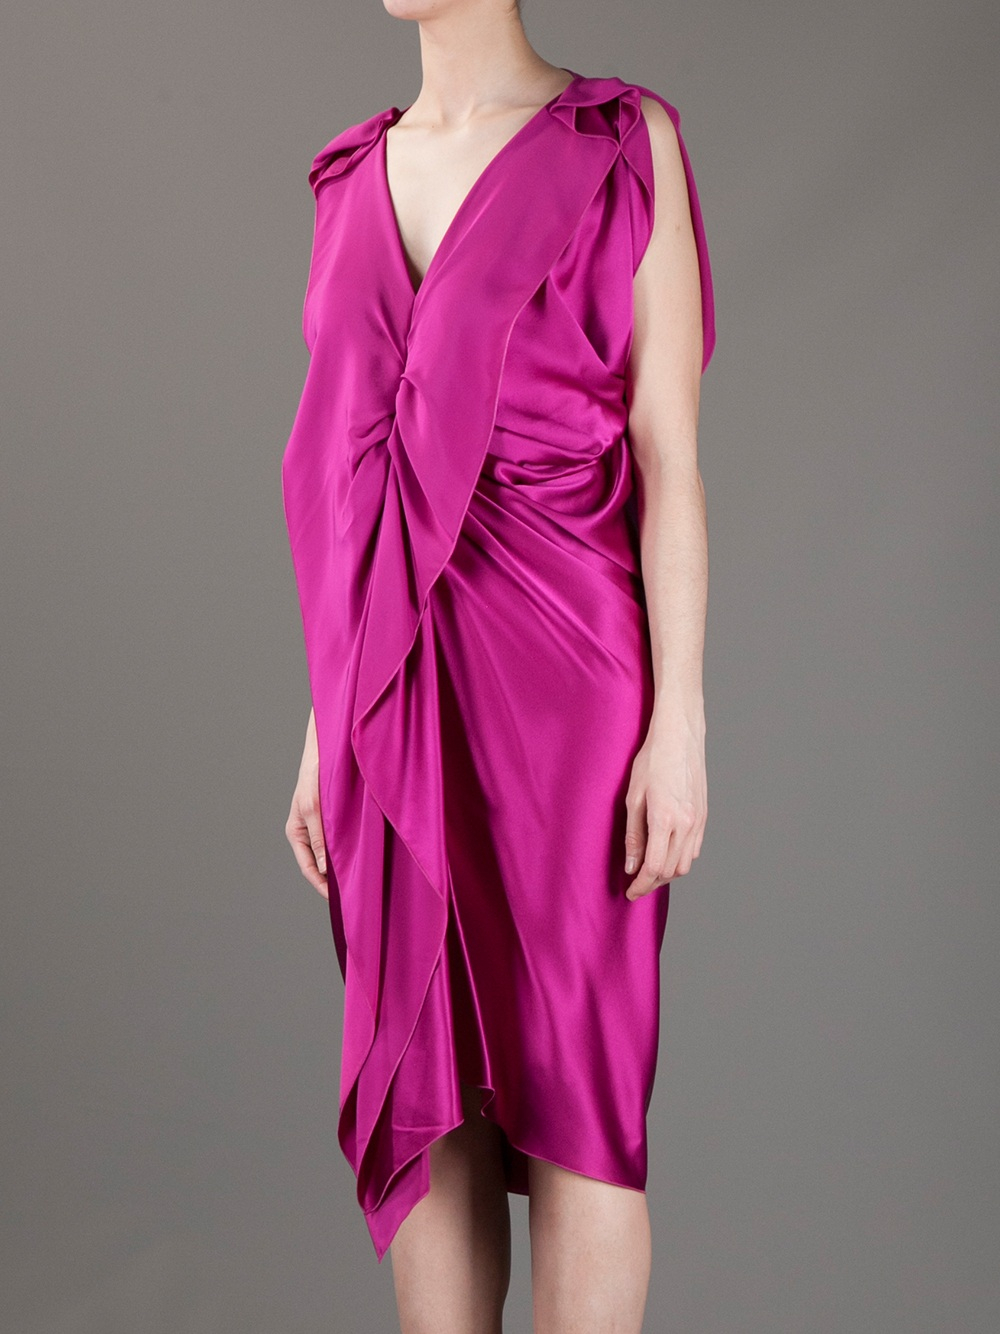 Lyst - Lanvin Draped Dress in Pink